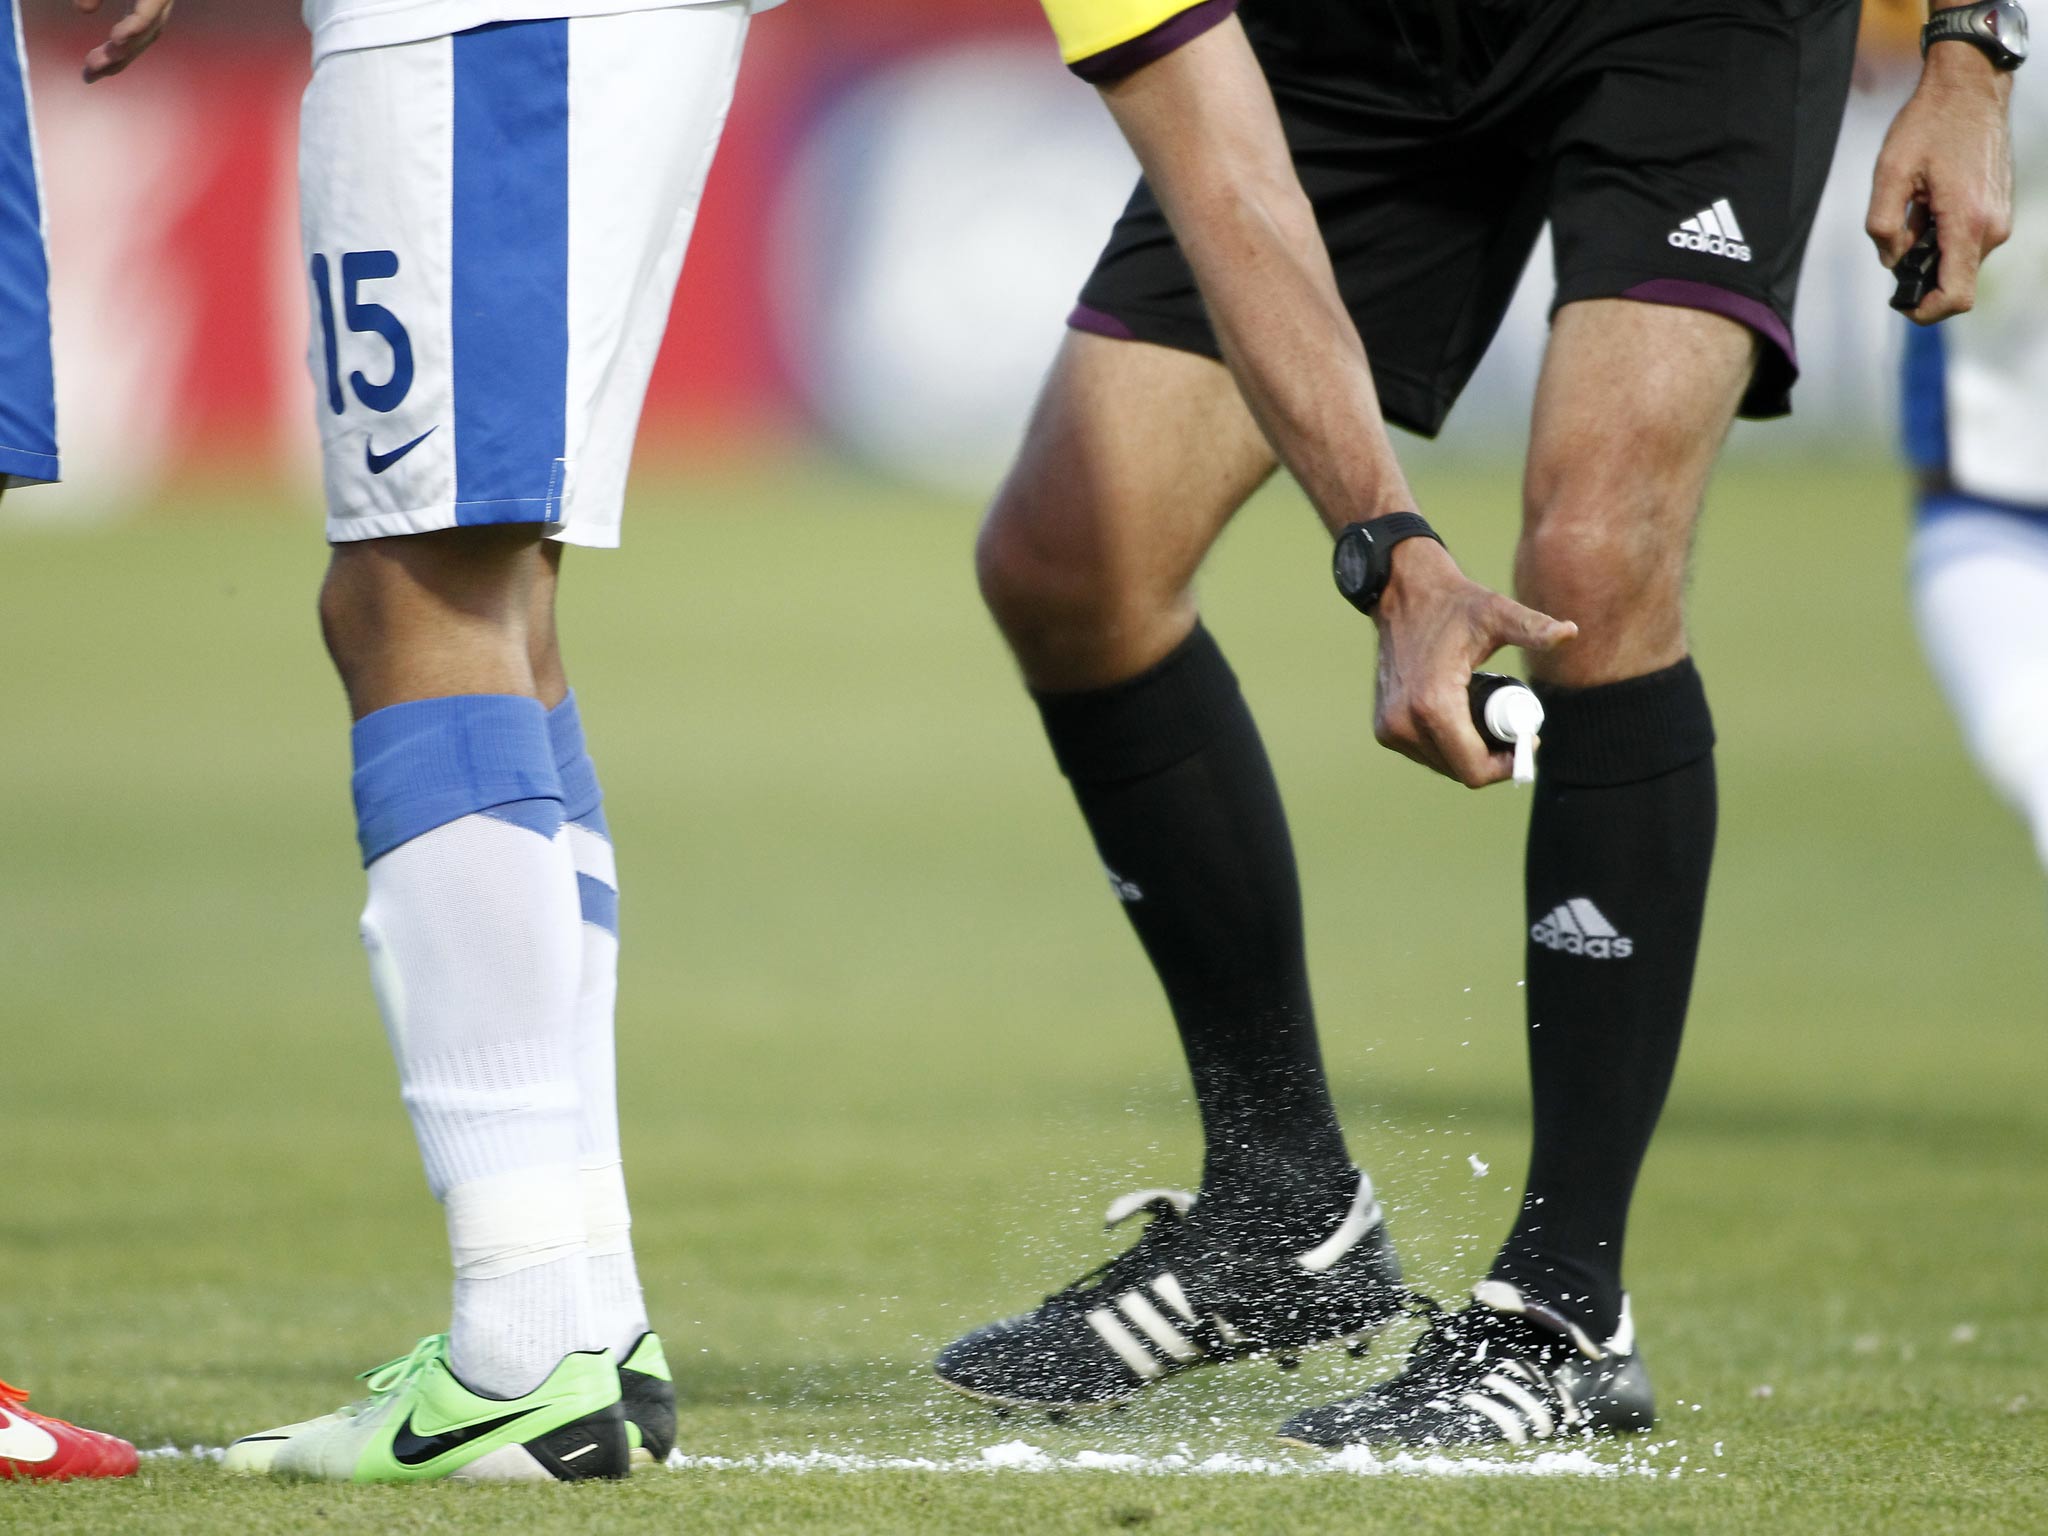 A referee uses vanishing spray